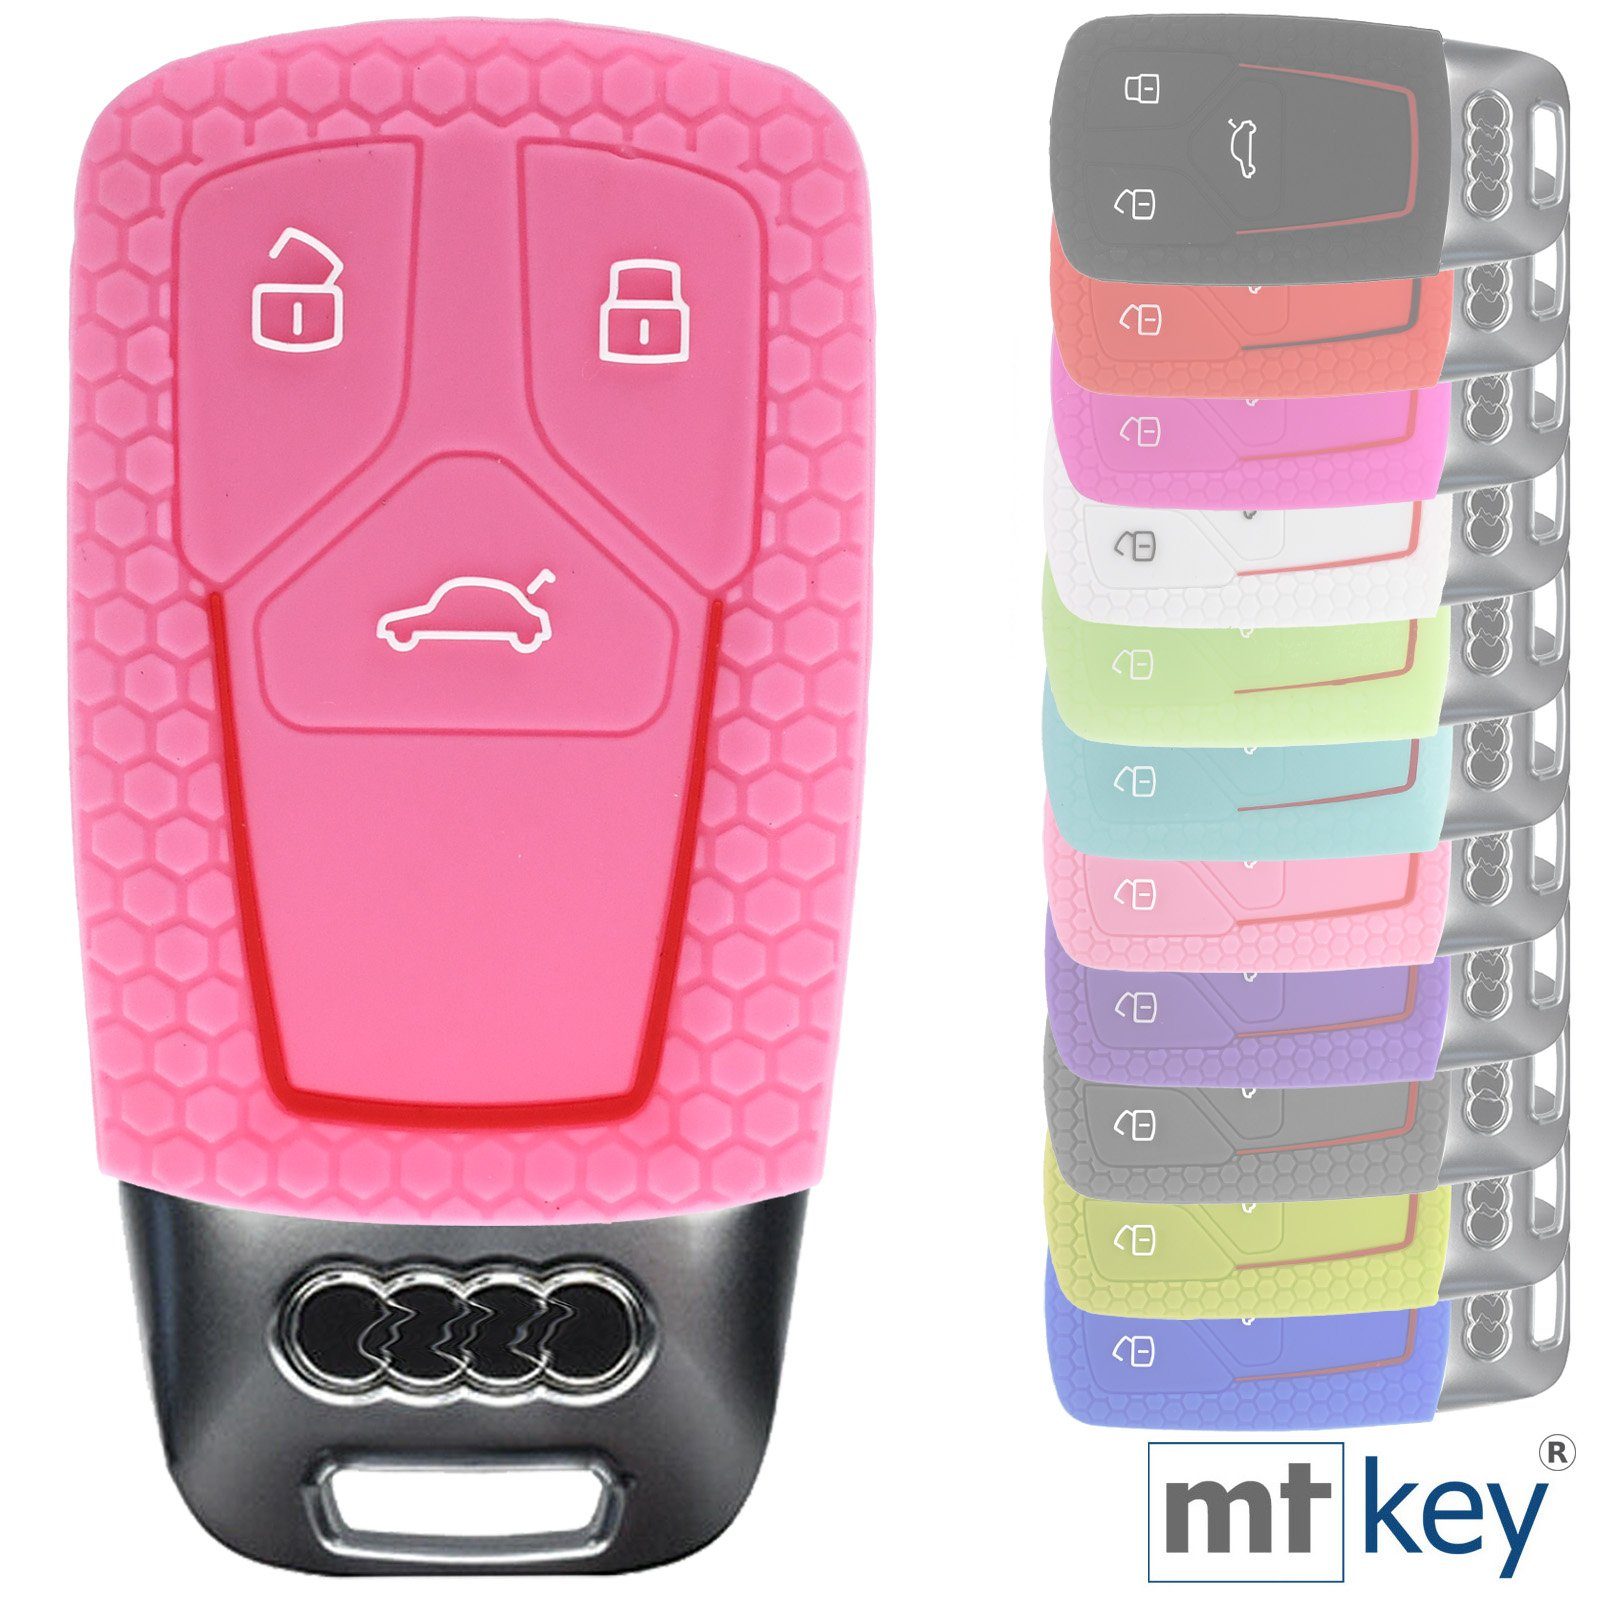 mt-key Schlüsseltasche Silikon SMARTKEY + für Q5 A4 A5 Wabe Rosa KEYLESS Schlüsselband, 3 TT A6 A8 Autoschlüssel Design Tasten Q8 Schutzhülle im Audi Q2 A7 Q7